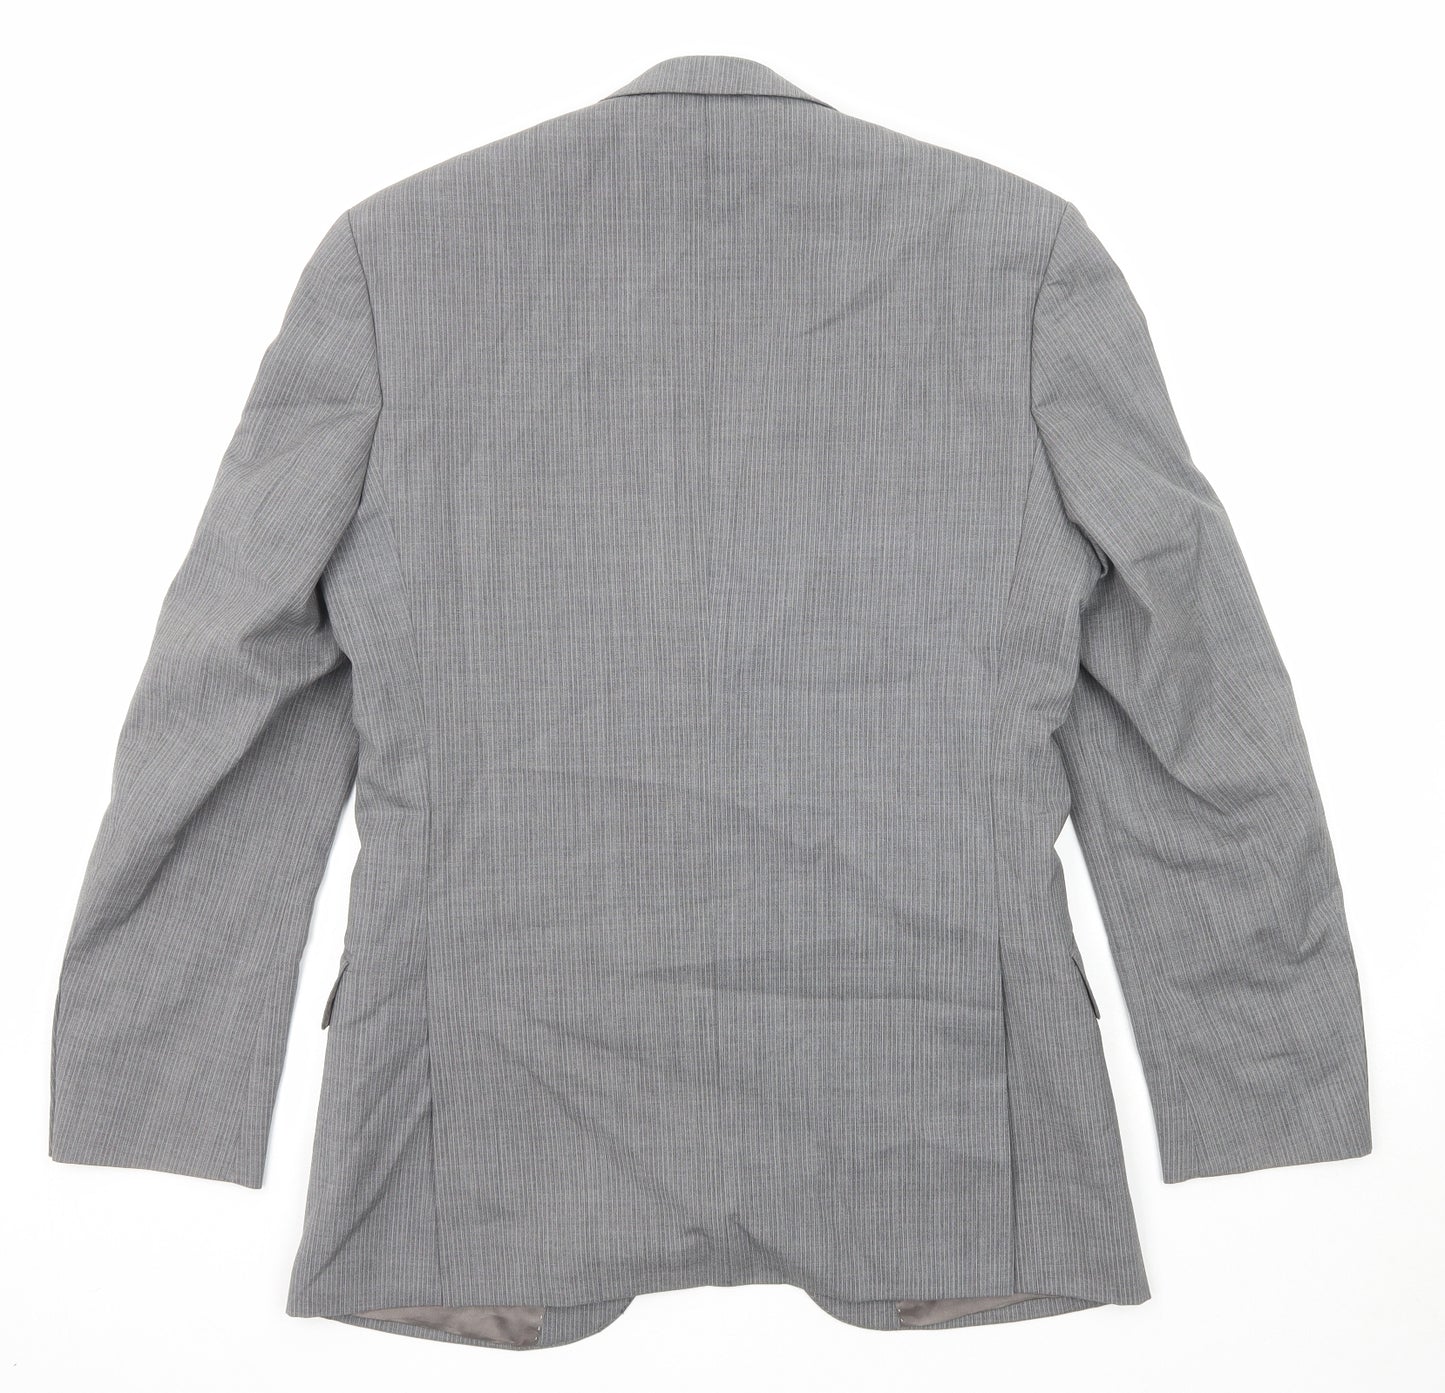 Burton Mens Grey Wool Jacket Suit Jacket Size 36 Regular